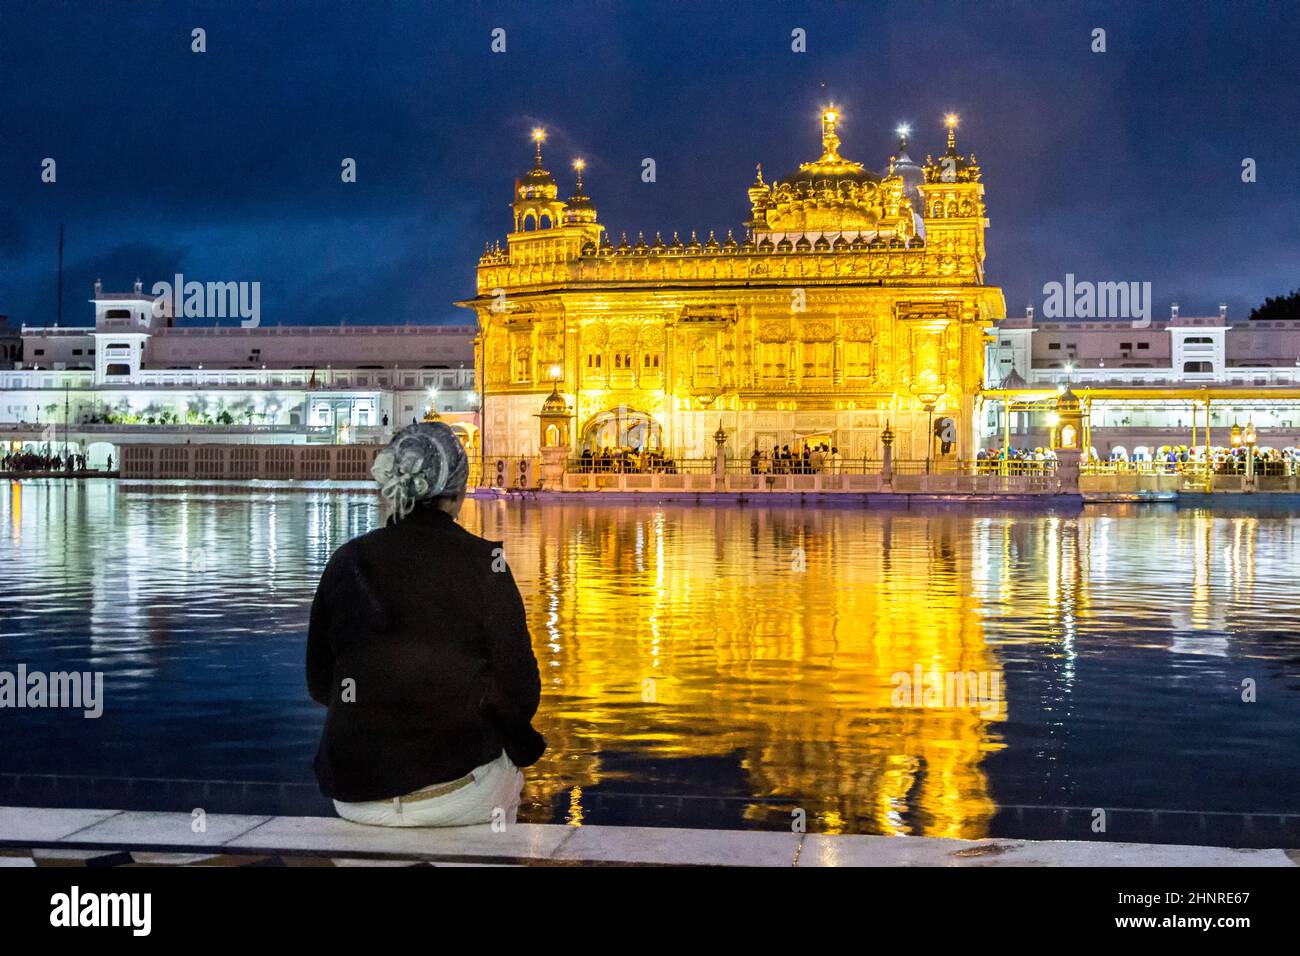 Harimandir Sahib at the Golden temple complex, Amritsar - India Stock Photo